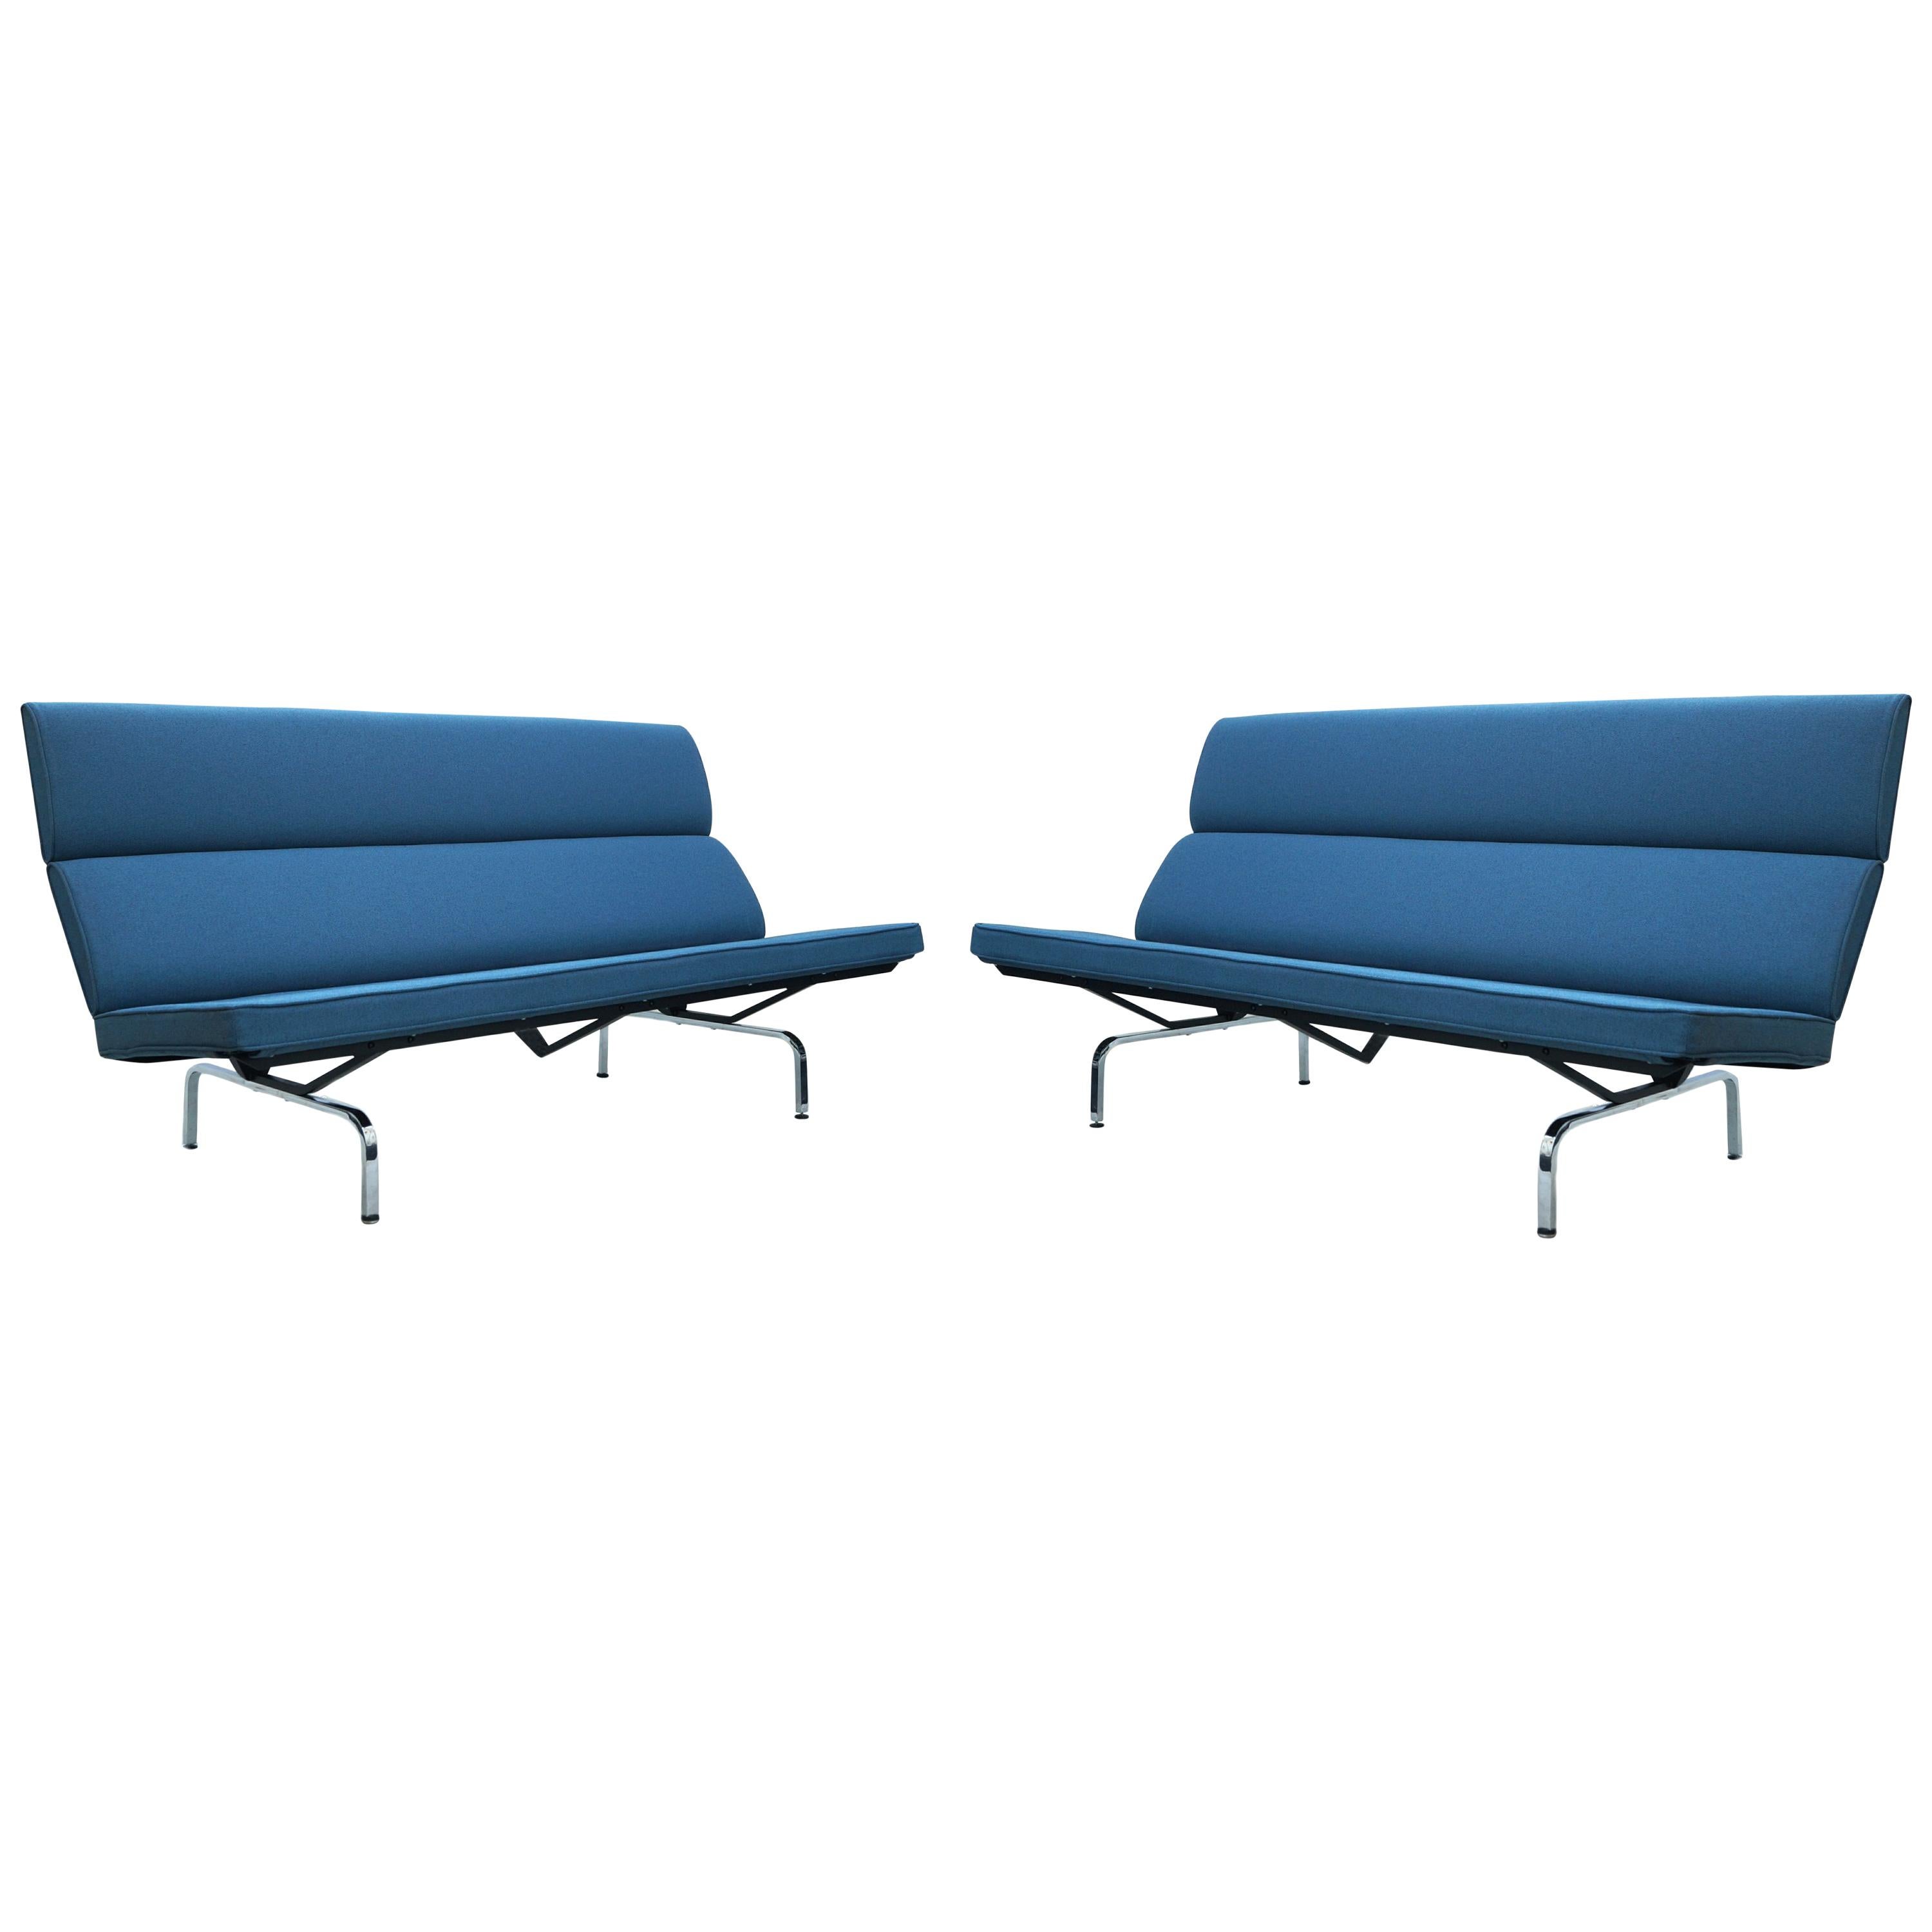 Charles & Ray Eames Herman Miller Compact Sofa Pair or Single